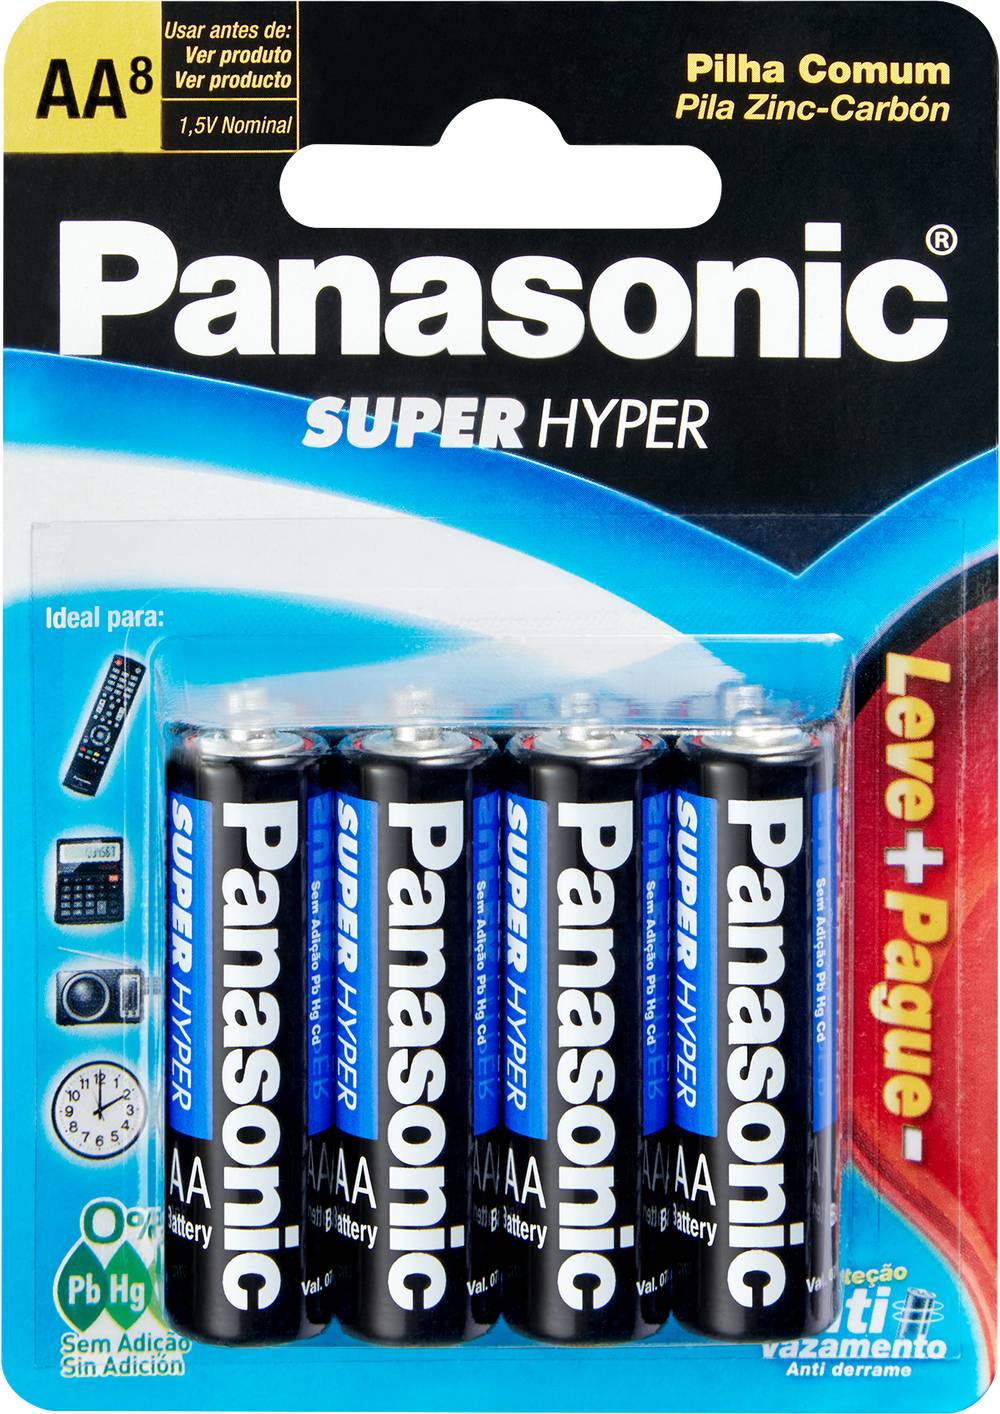 Panasonic pilha comum super hyper aa (8 unidades)